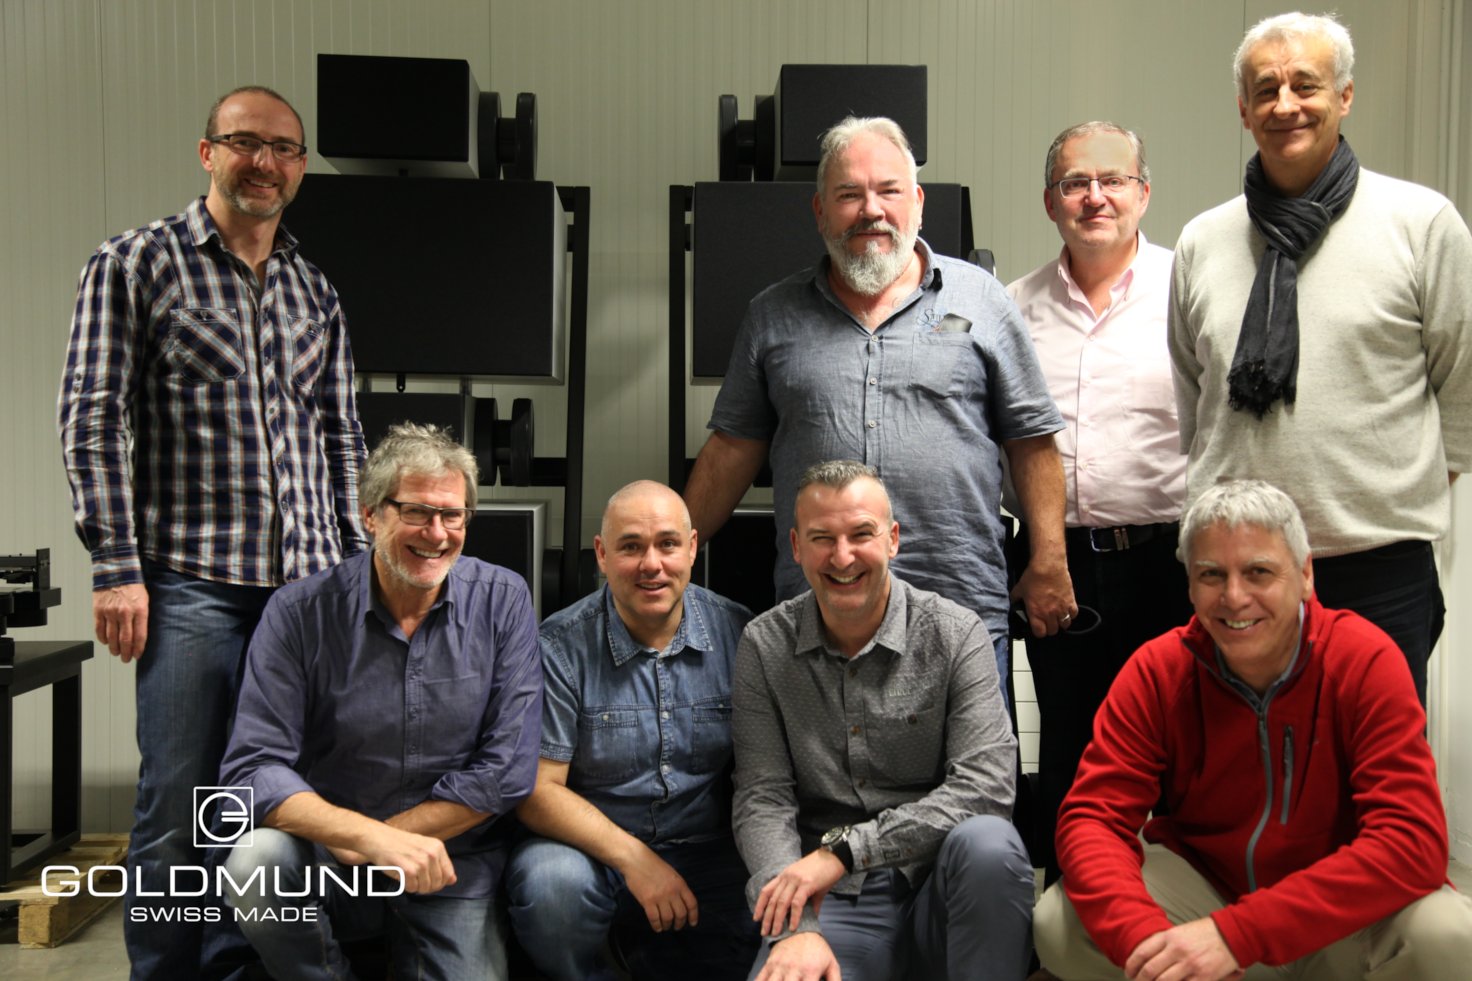 customer visit to goldmund factory in geneva, switzerland